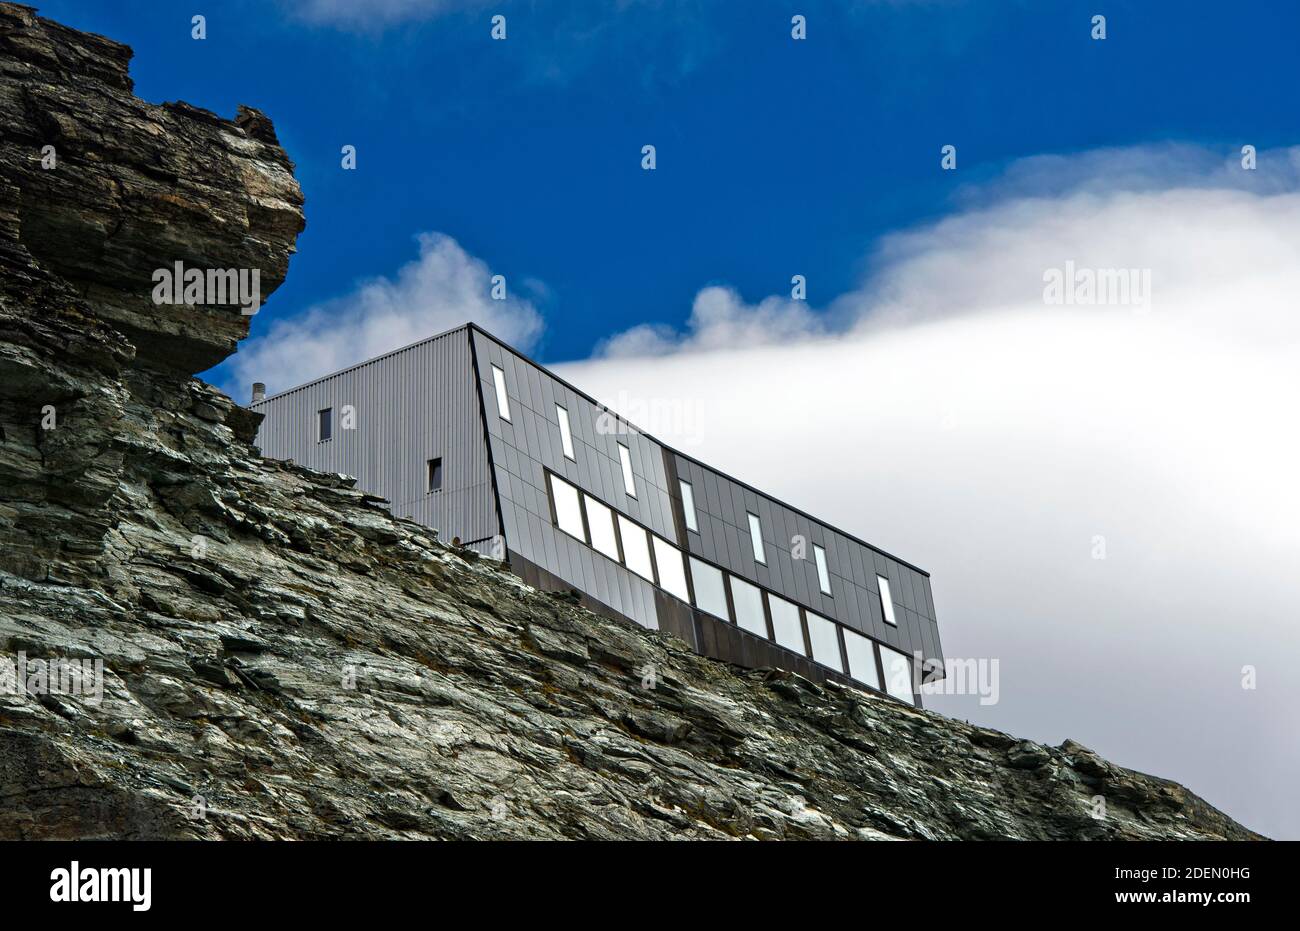 Berghütte Cabane de Tracuit, Zinal, Val d'Anniviers, Wallis, Schweiz /  Mountain hut Cabane de Tracuit, Zinal, Val d'Anniviers, Valais, Switzerland  Stock Photo - Alamy